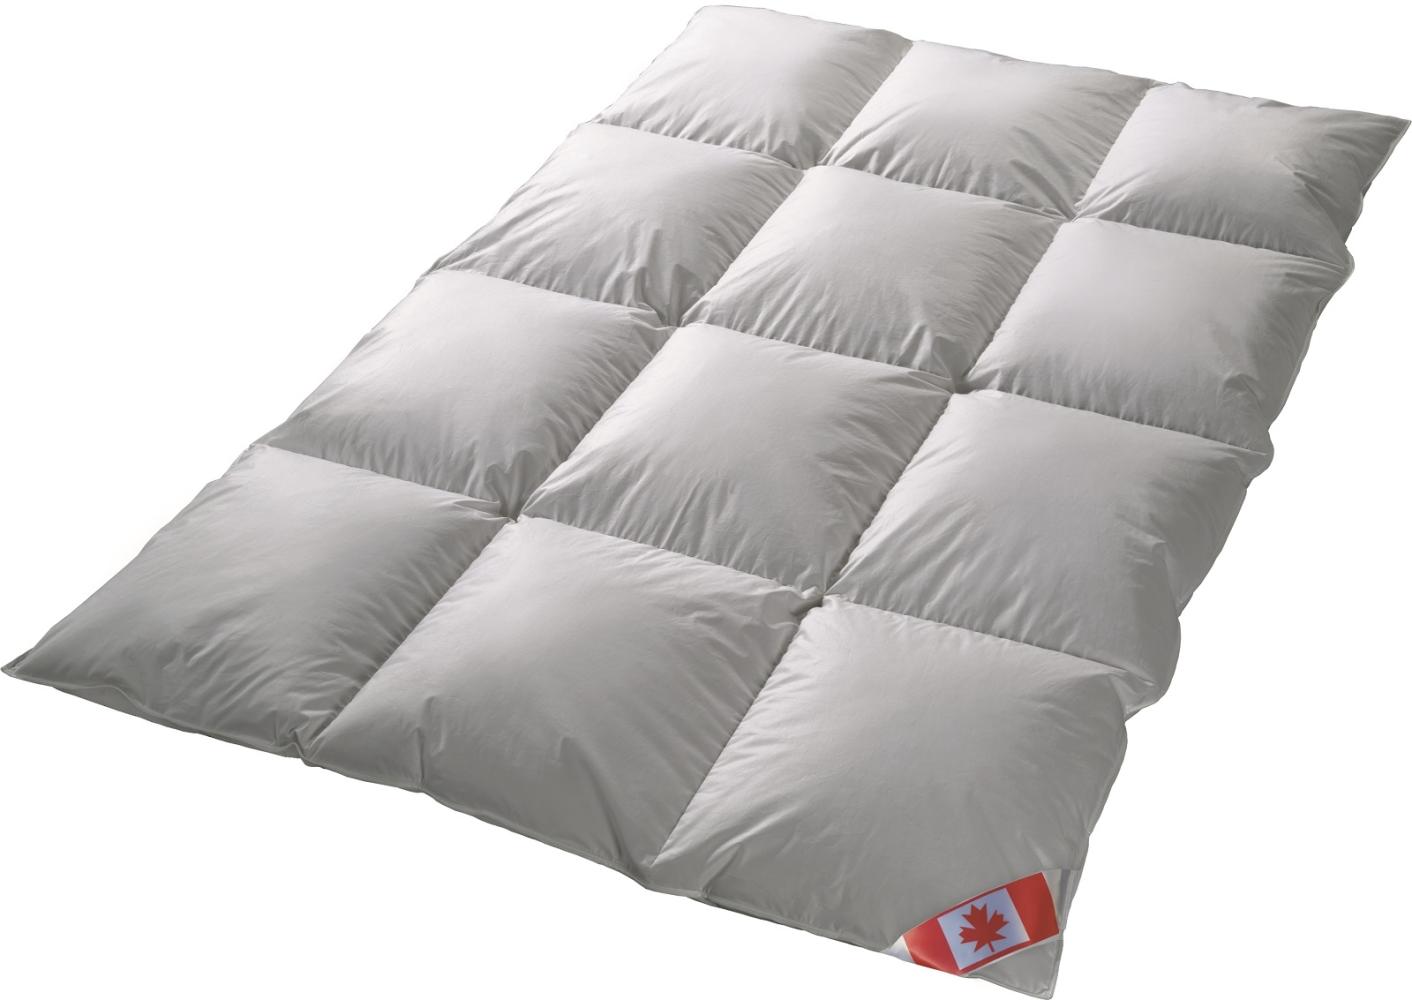 Canada extra warme Winter Decke Kassetten Hochsteg 100% Daune 240x220 cm C5 Bild 1